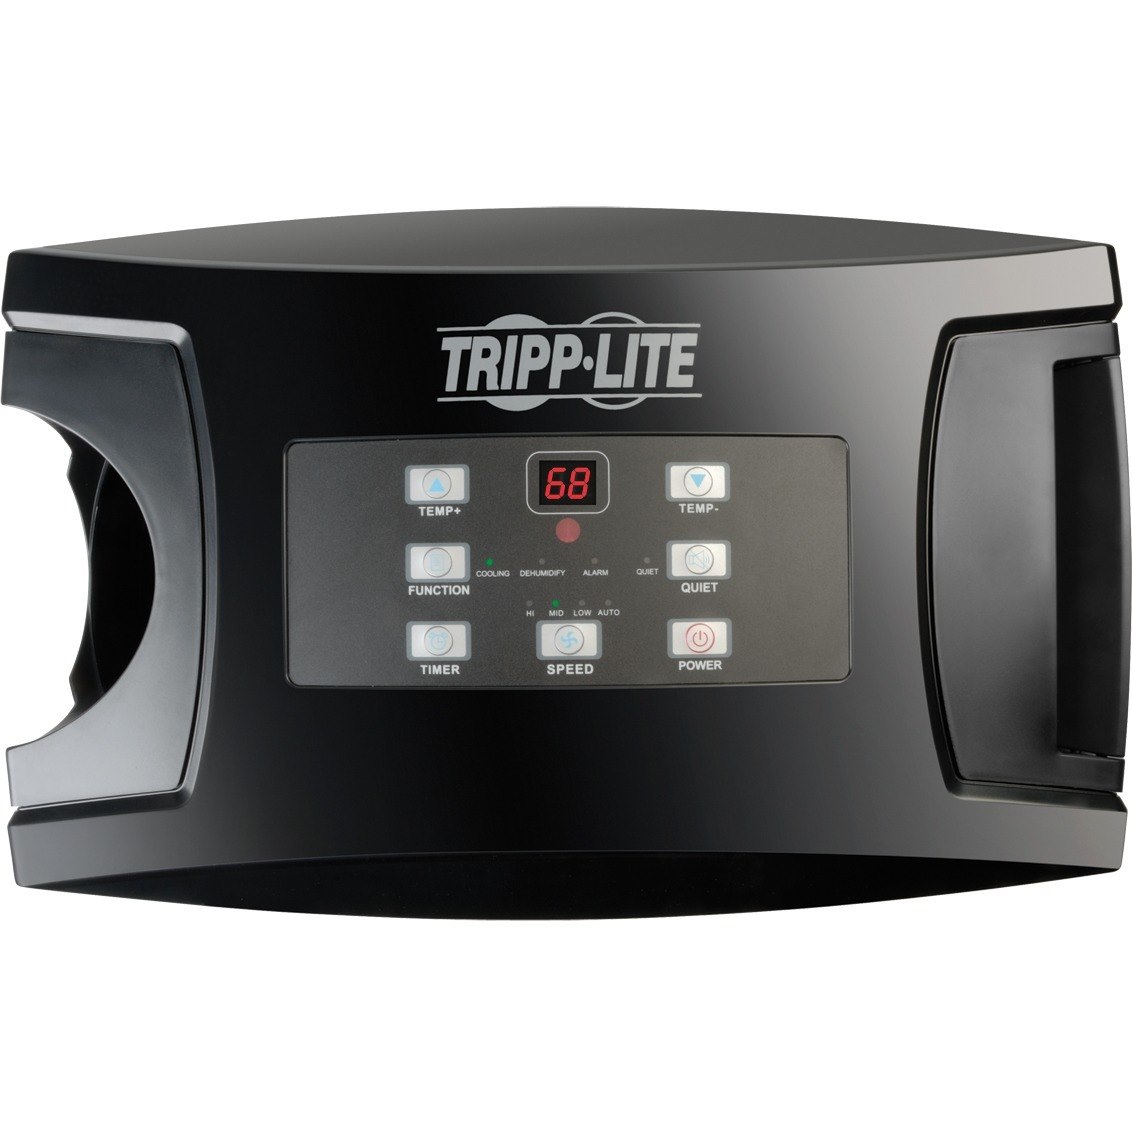 Tripp Lite by Eaton Portable AC Unit for Server Rooms - 12,000 BTU (3.5 kW), 230V